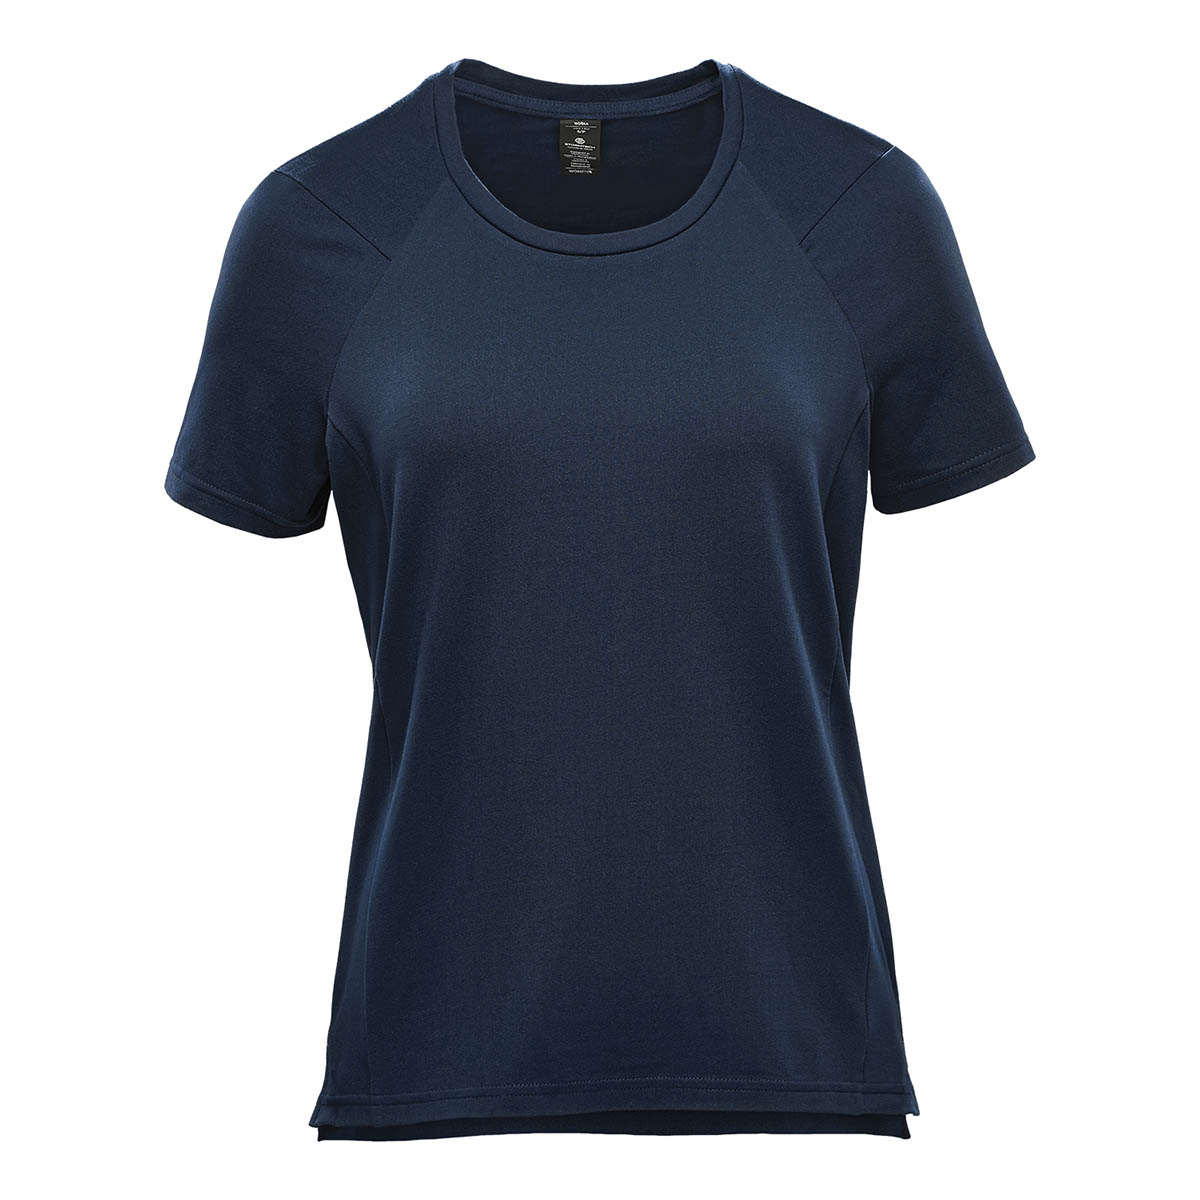 ClimateRight T-Shirt Shirt Womens Blue Large Short Sleeve Crew